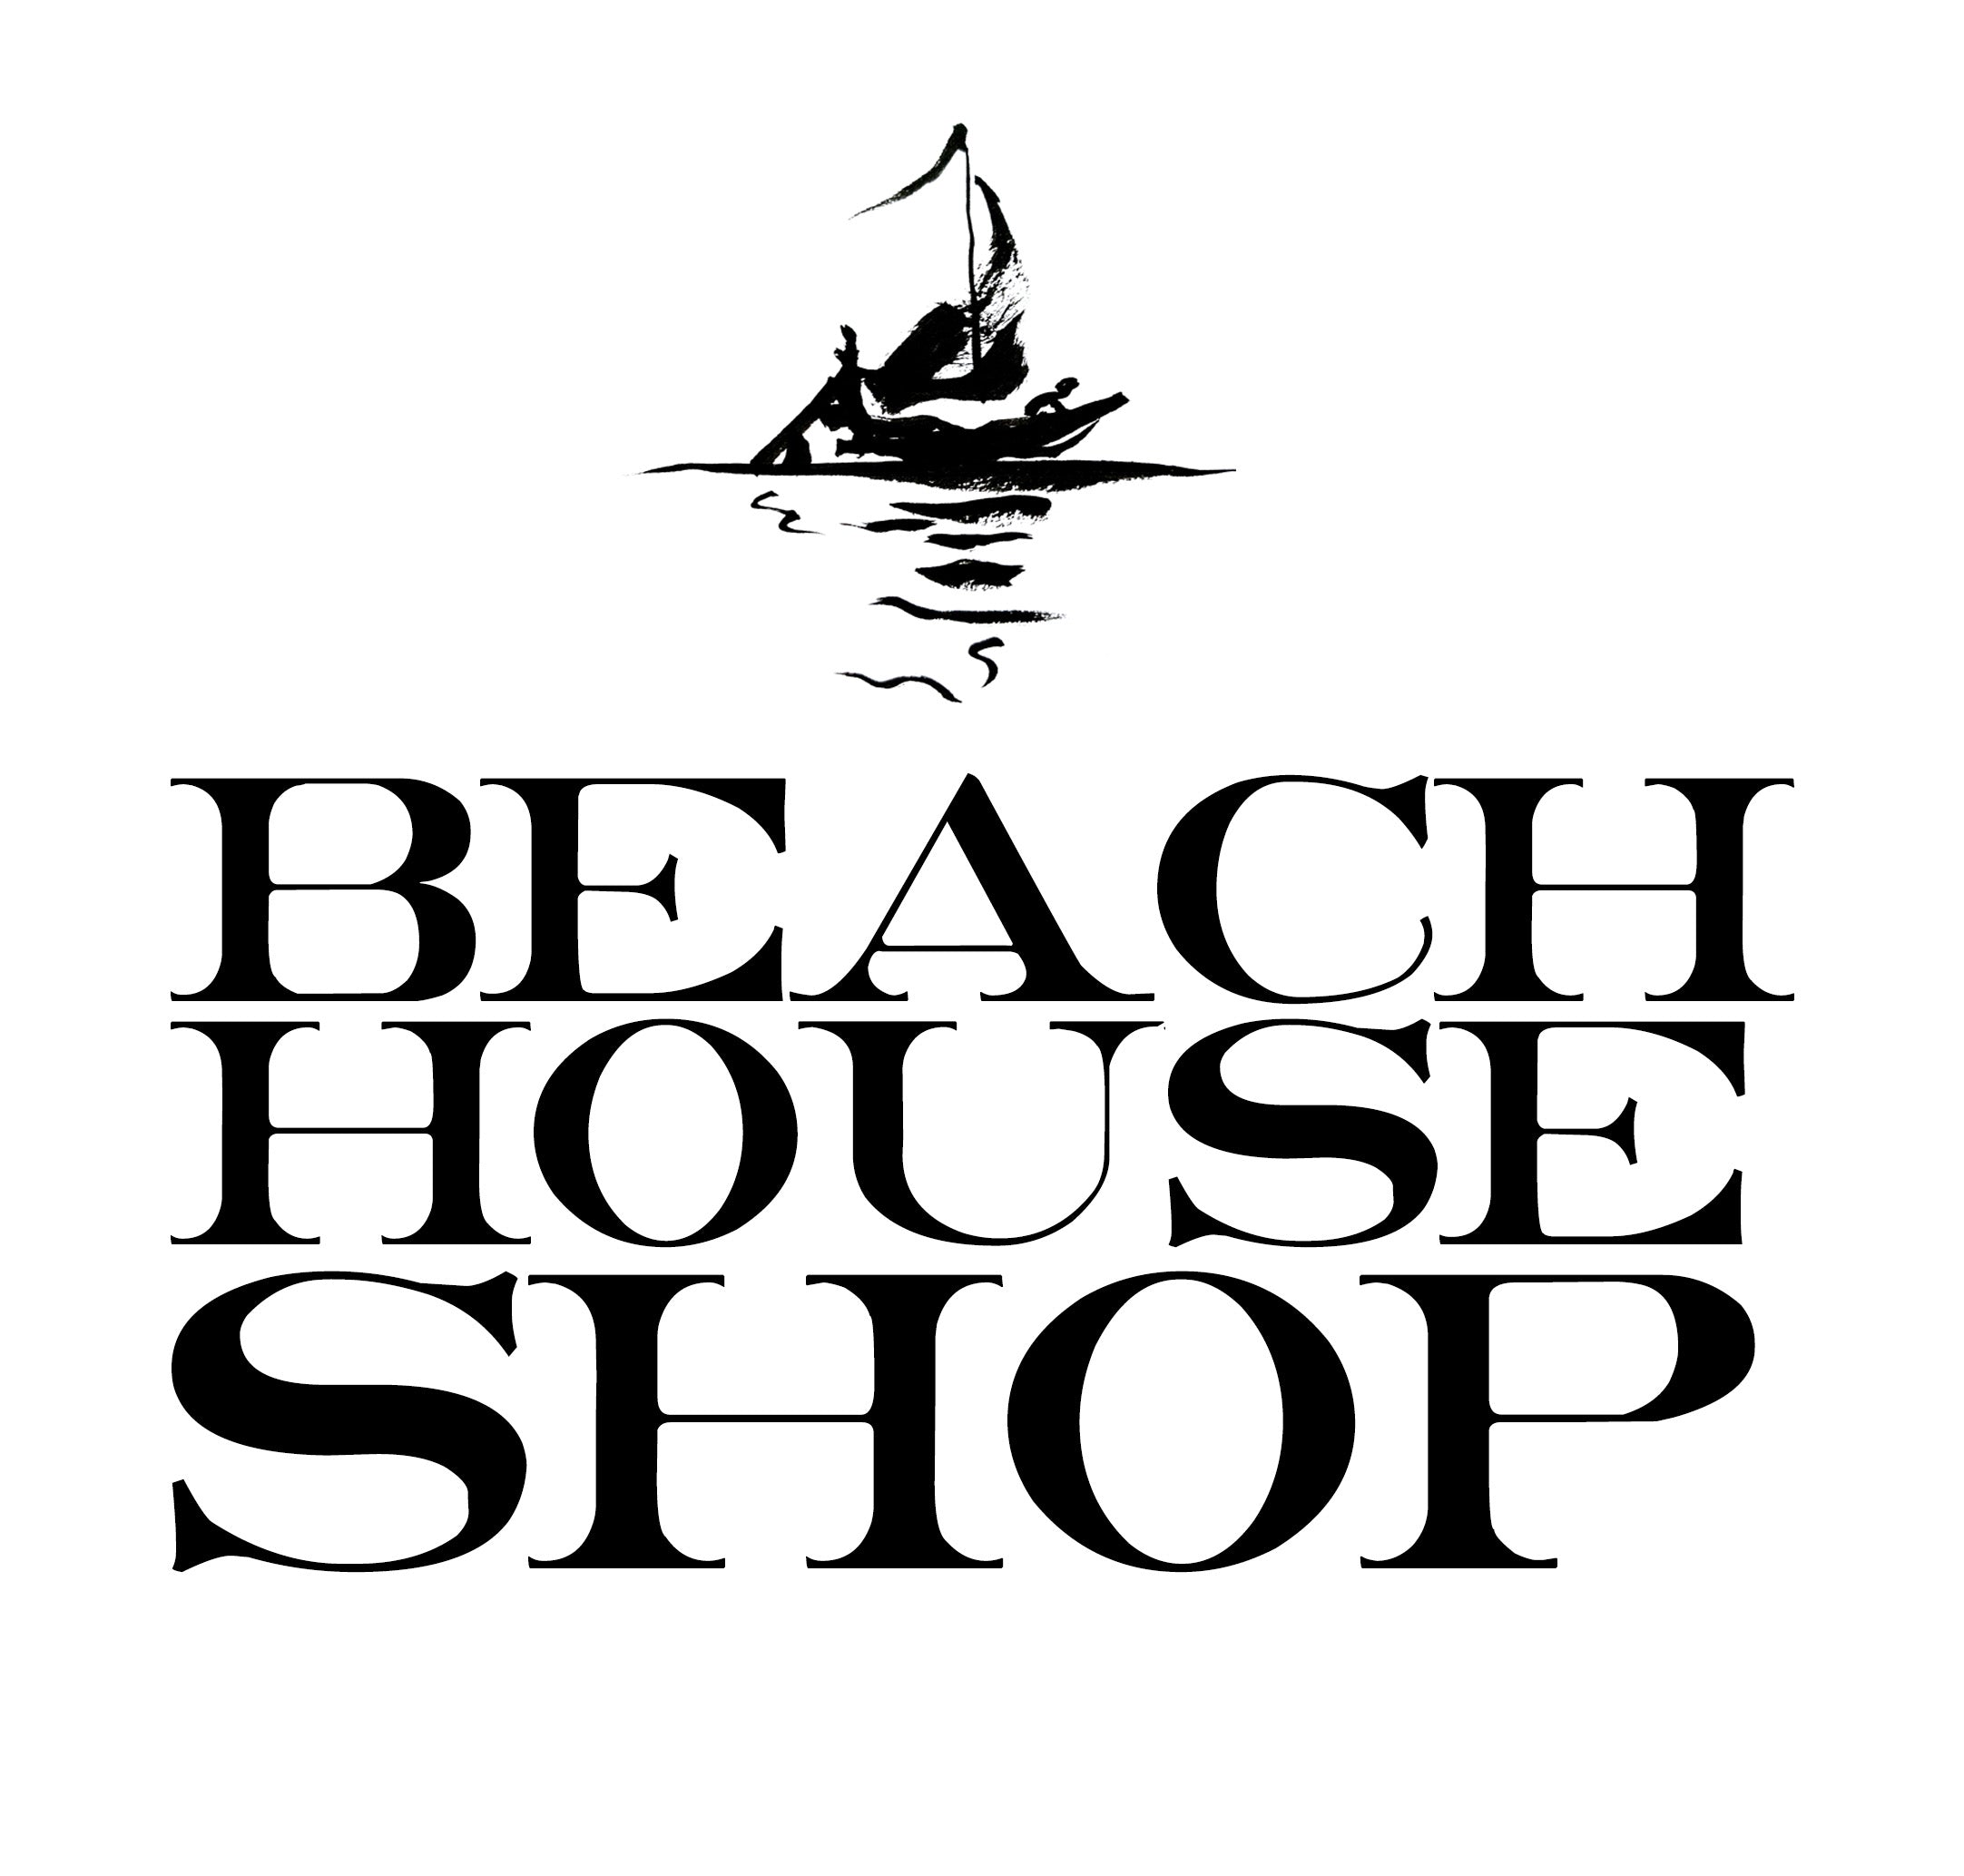 Beach House Shop